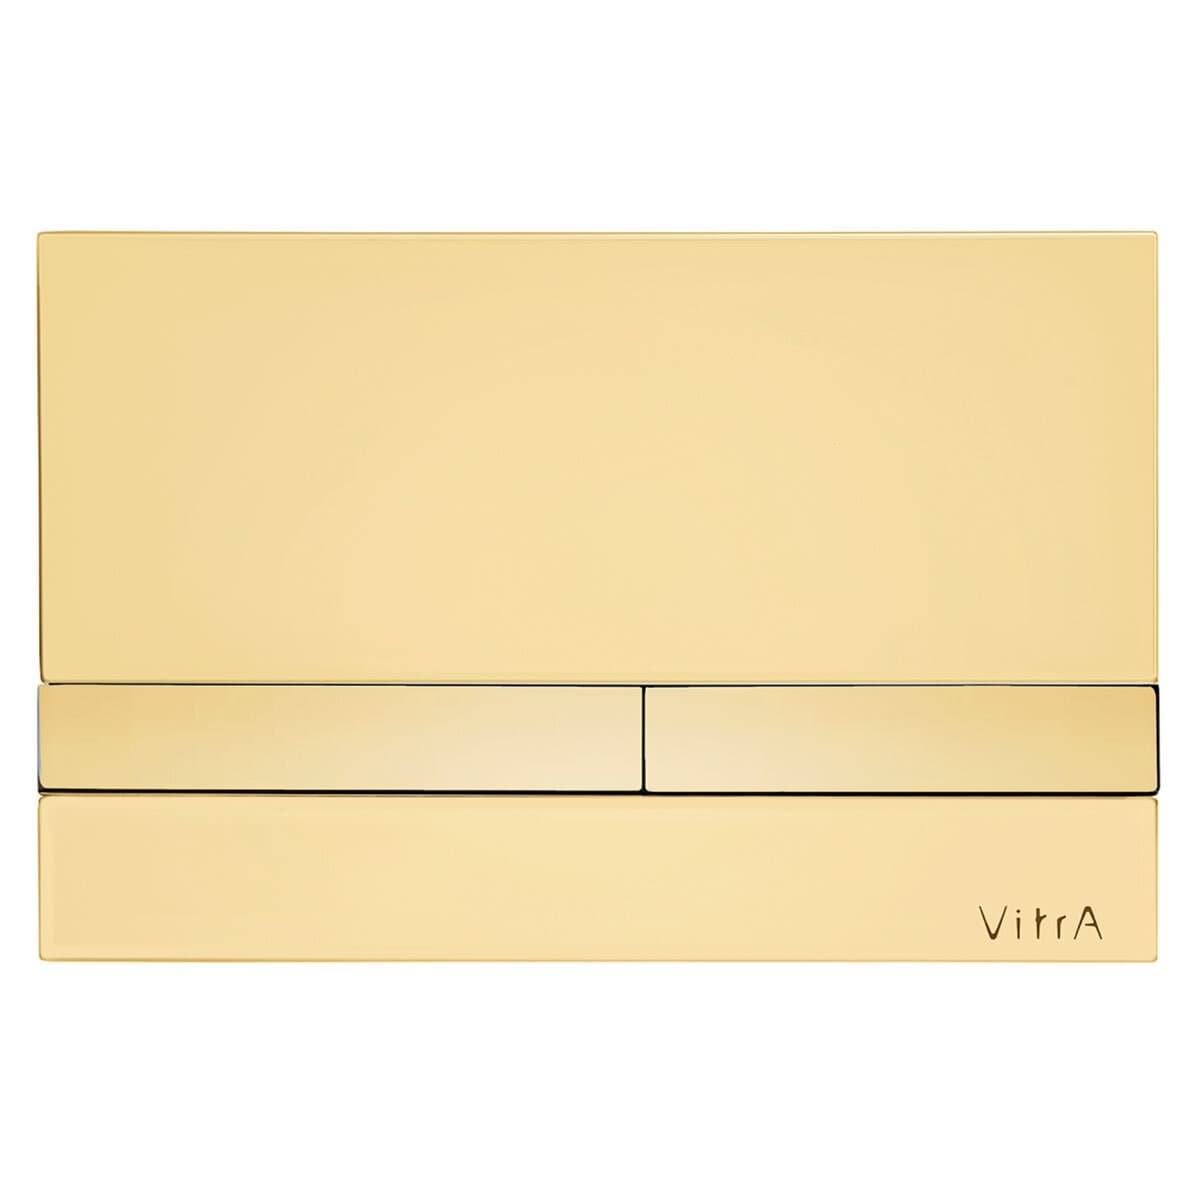 VitrA Select  Betätigungsplatte für 2-Mengenspülung - Gold